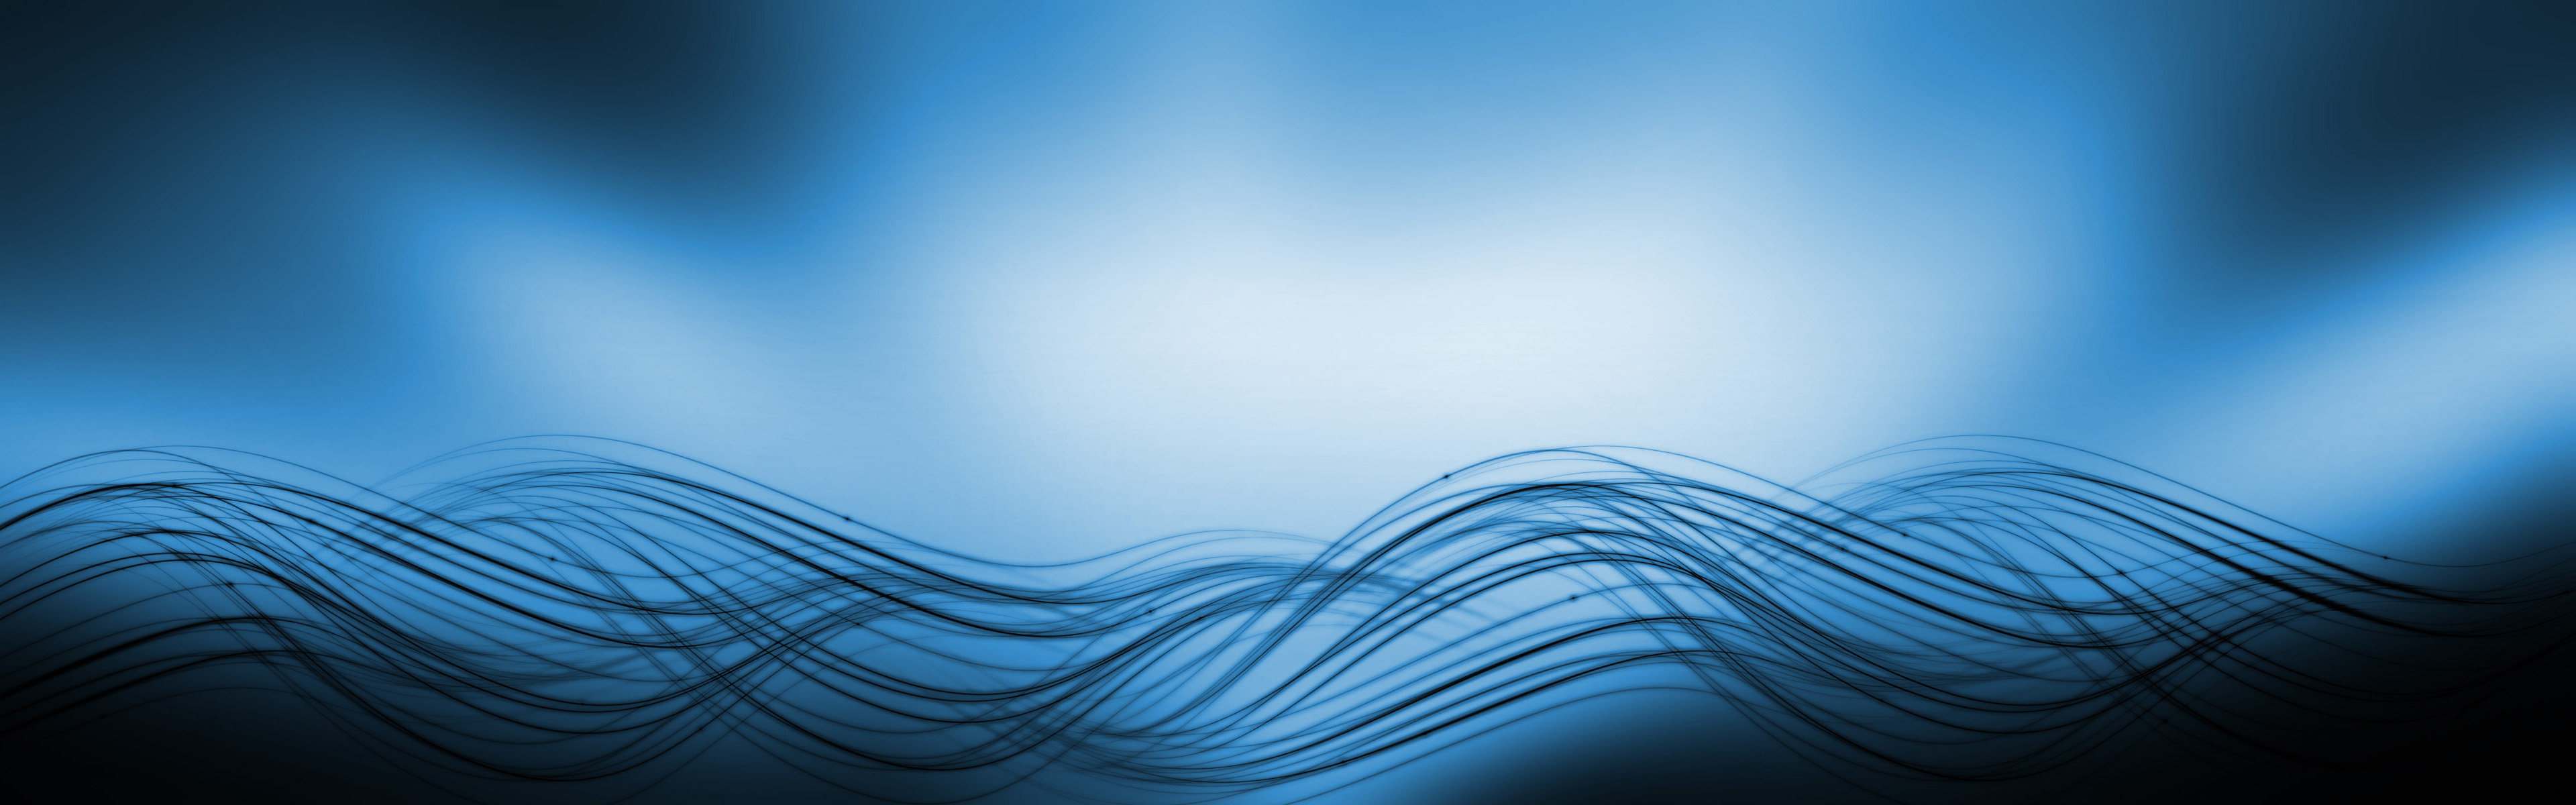 blue, waves, lines - desktop wallpaper